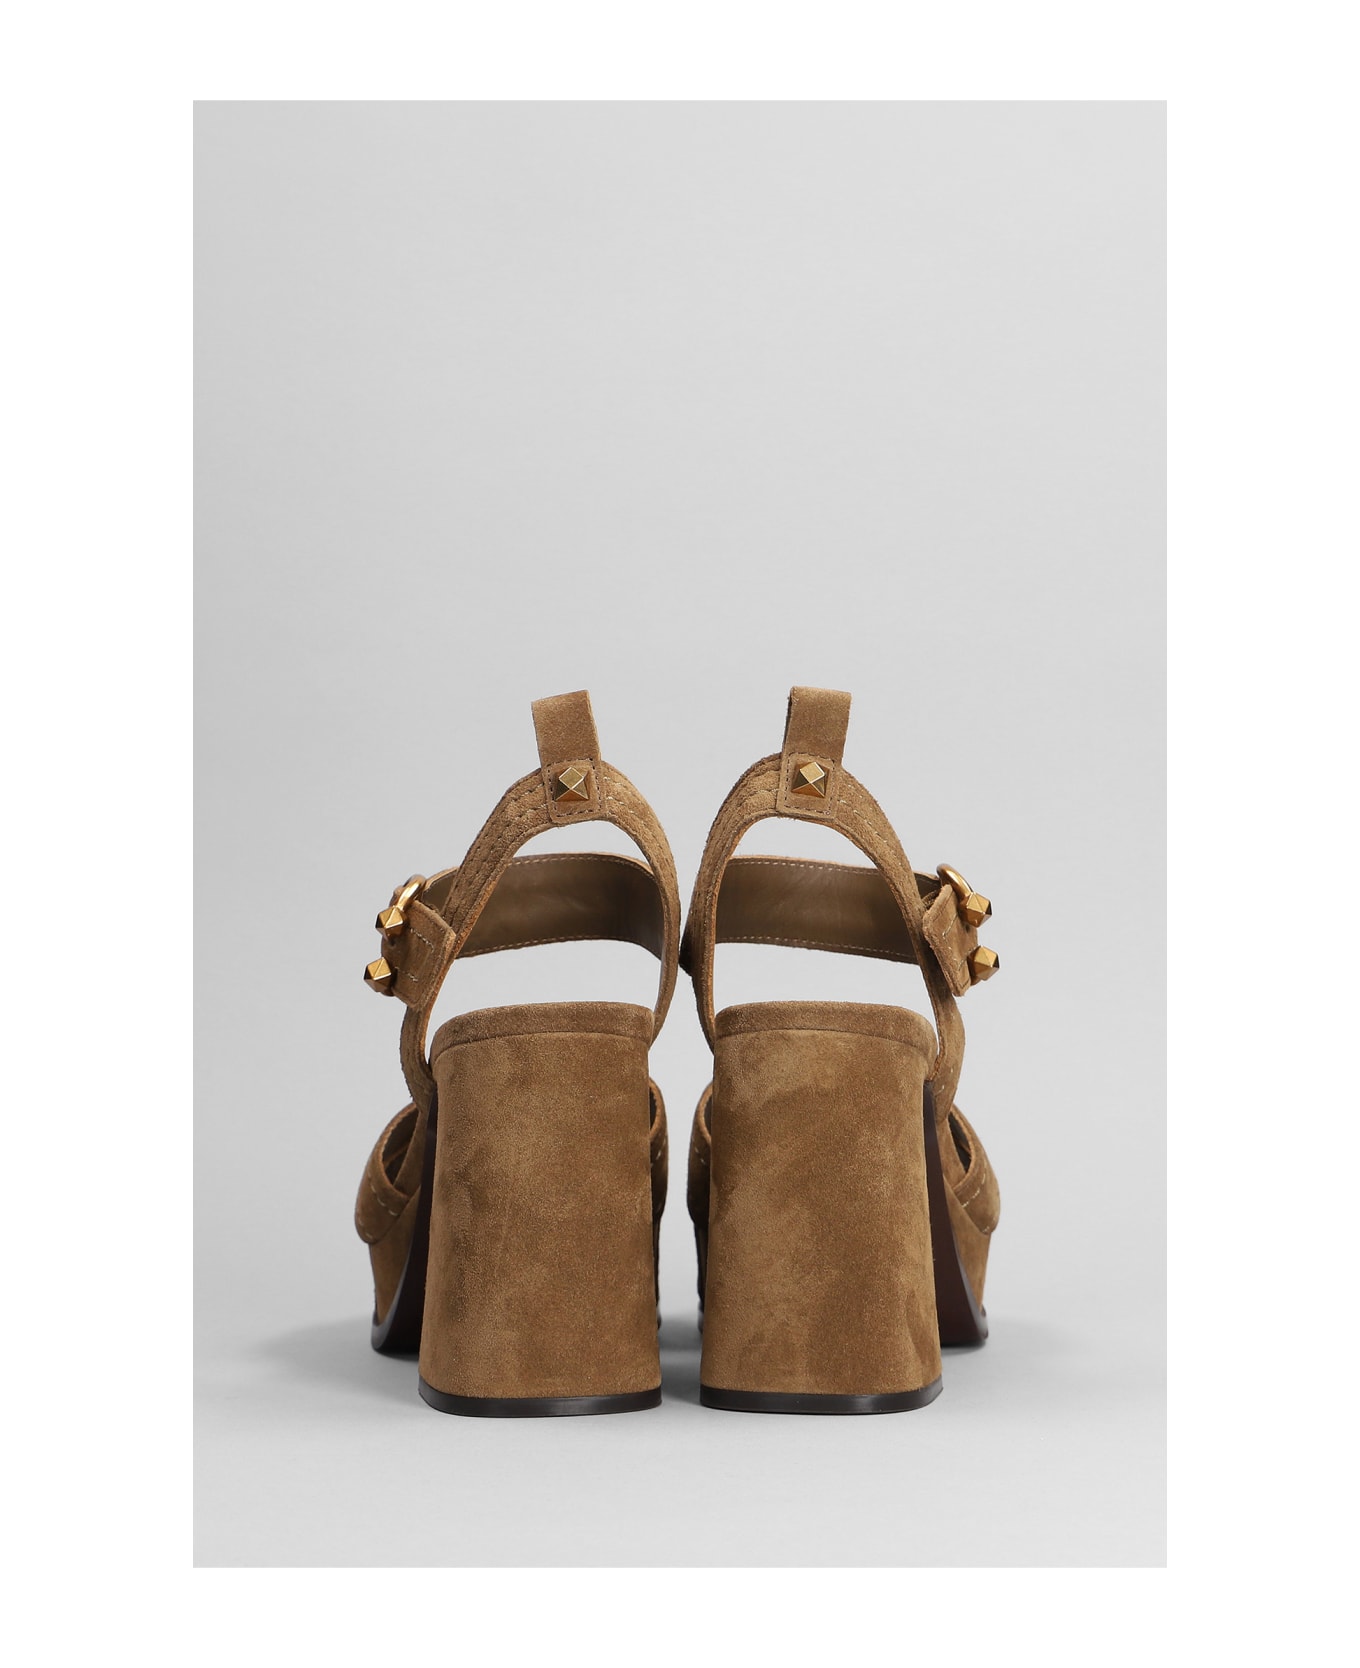 Ash Melany Sandals In Brown Suede - brown